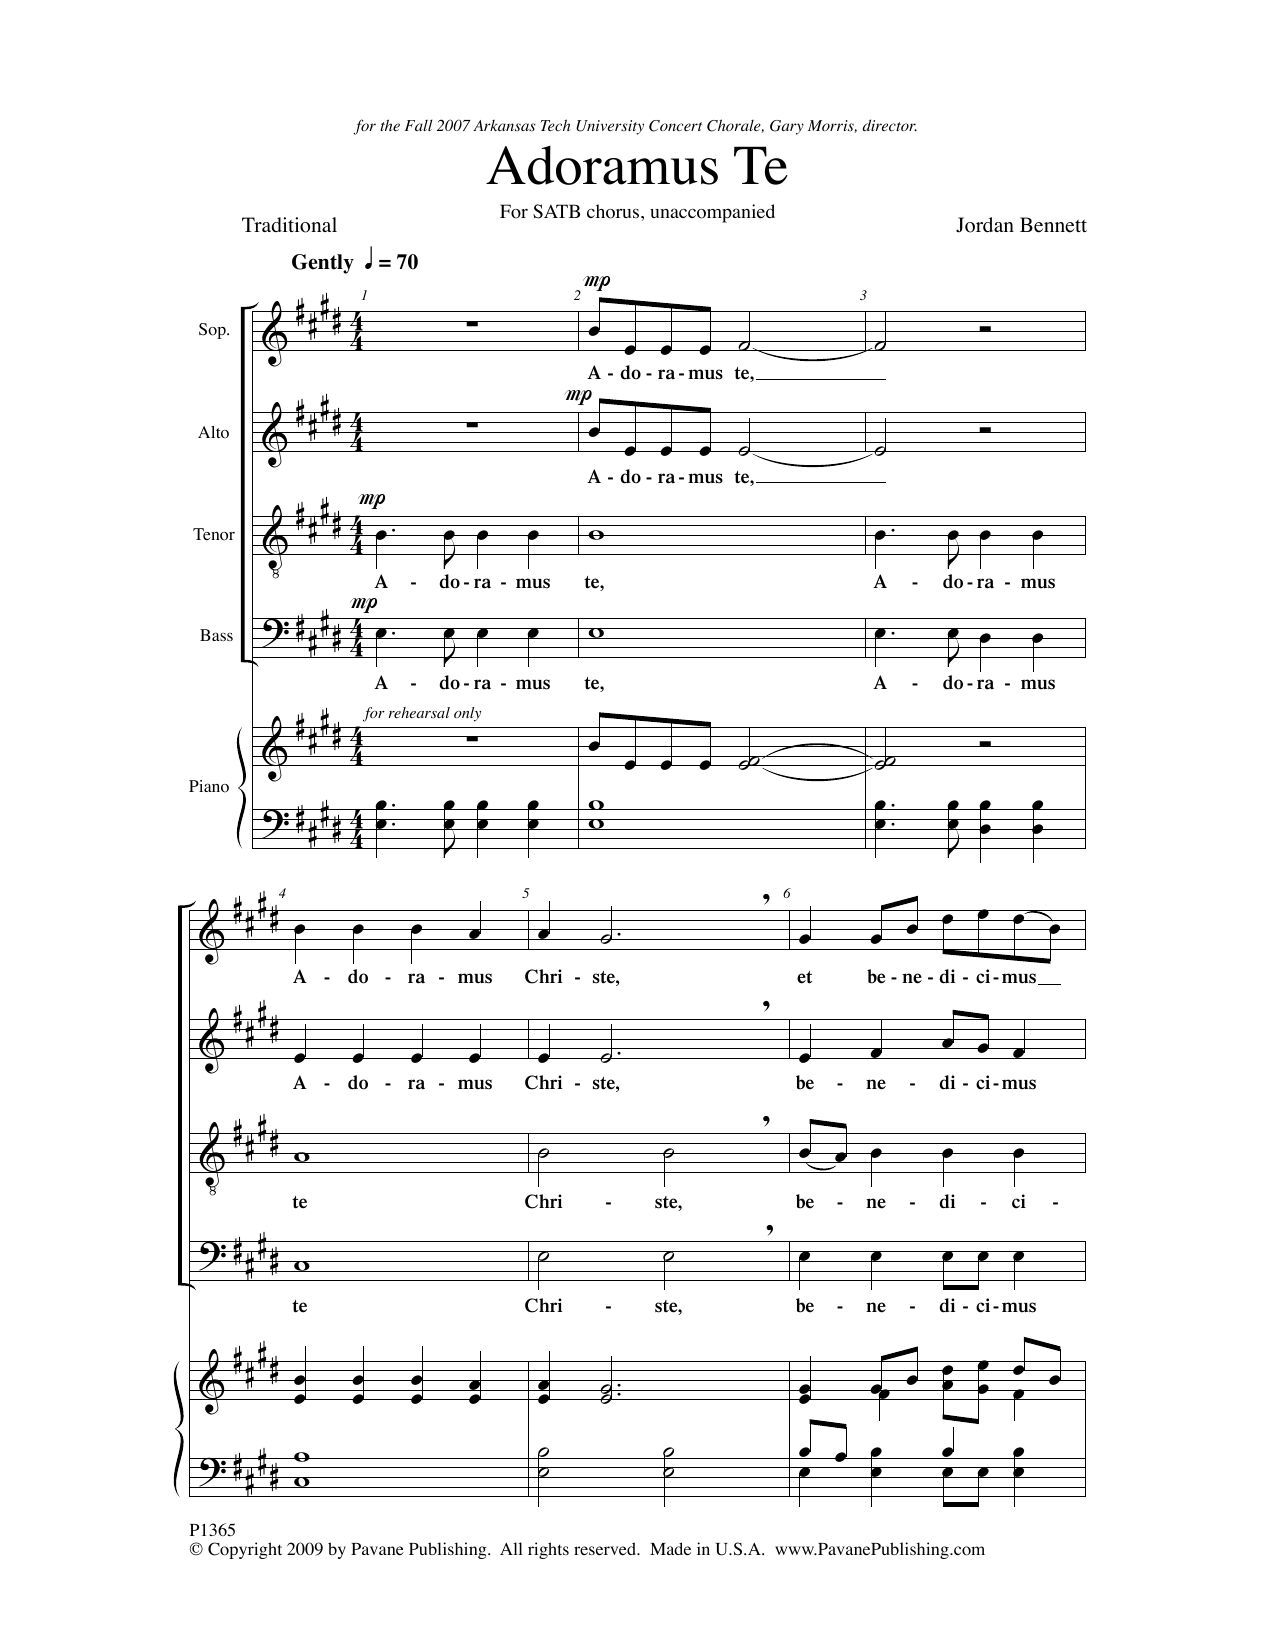 Jordan Bennett Adoramus Te Sheet Music Notes & Chords for SATB Choir - Download or Print PDF